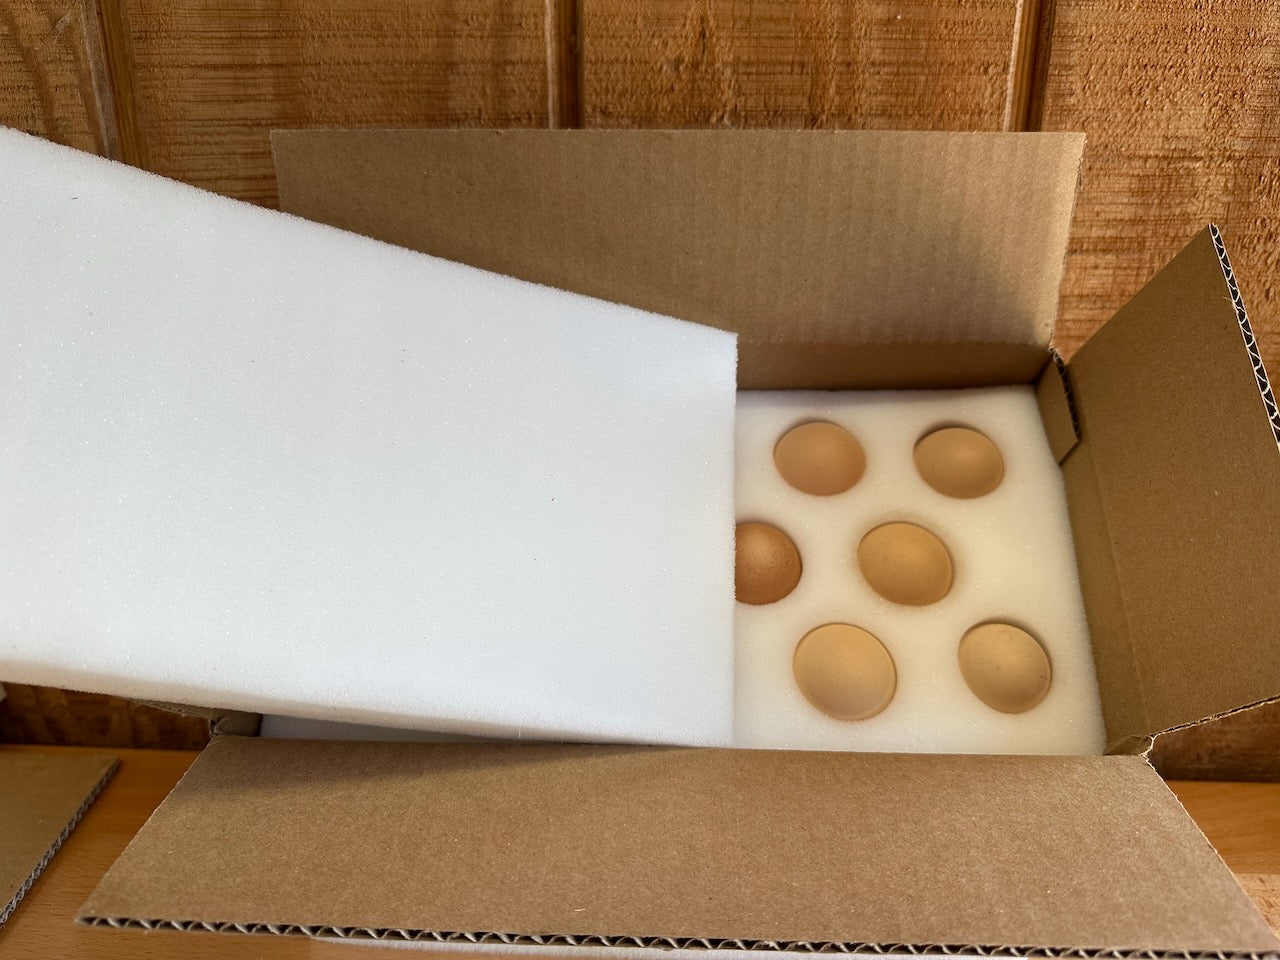 Eggs in shipping box with foam shipper